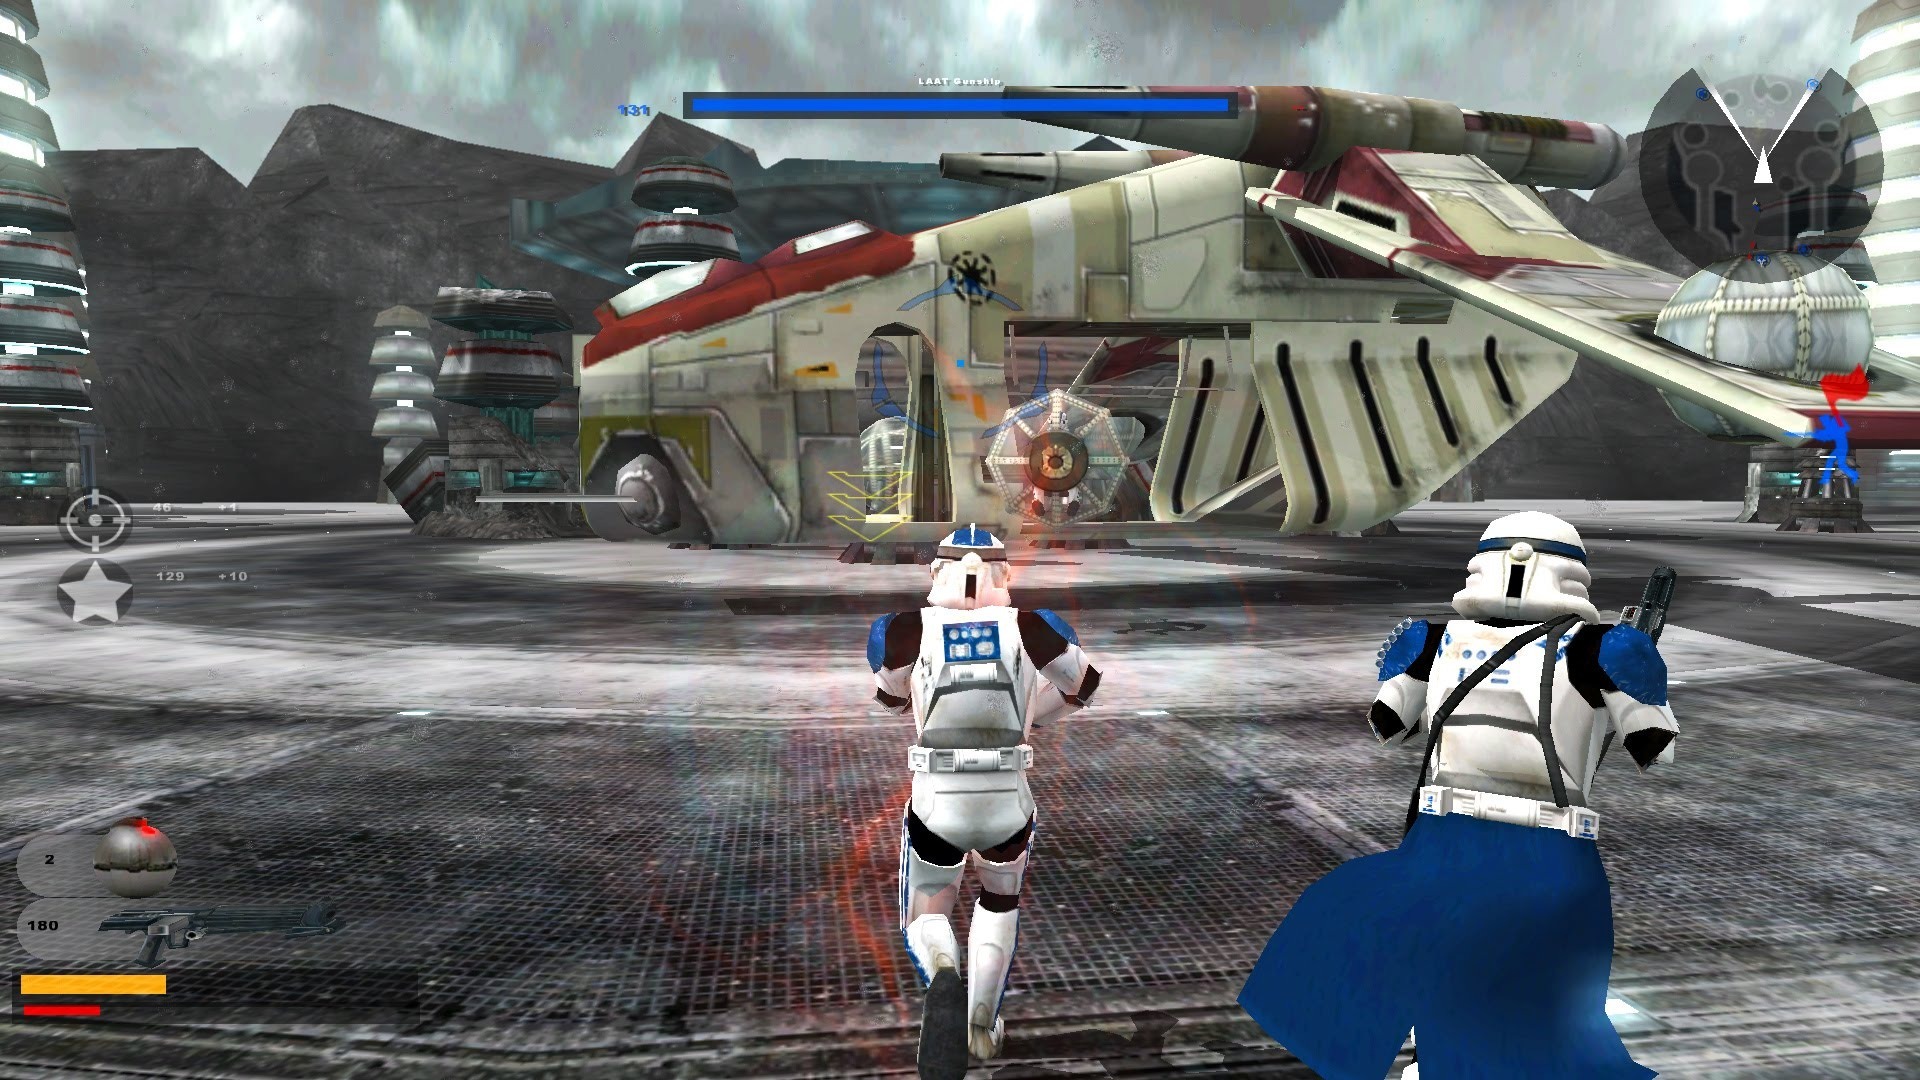 Star wars 2 game. Стар ВАРС батлфронт 2. Звёздные войны батлфронт 2 2005. Стар ВАРС батлфронт 2 геймплей. Star Wars: Battlefront (игра, 2005).